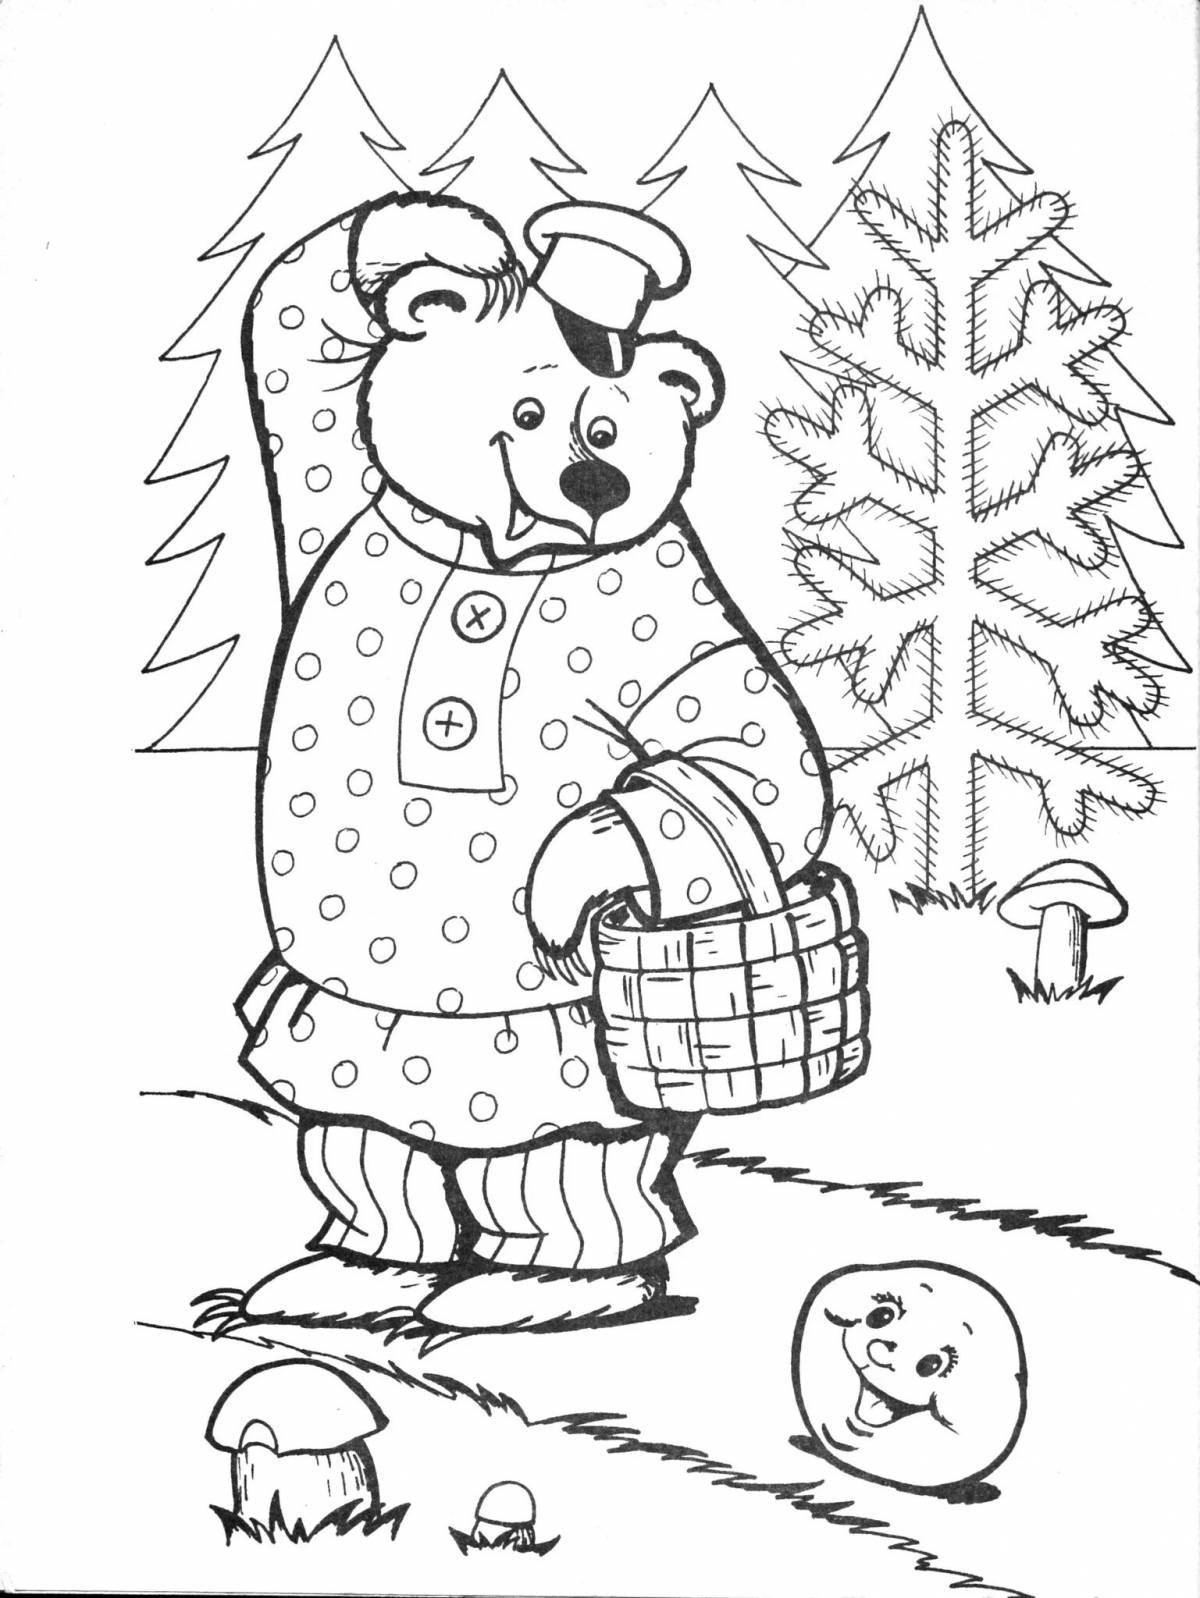 Coloring page adorable bun and bear